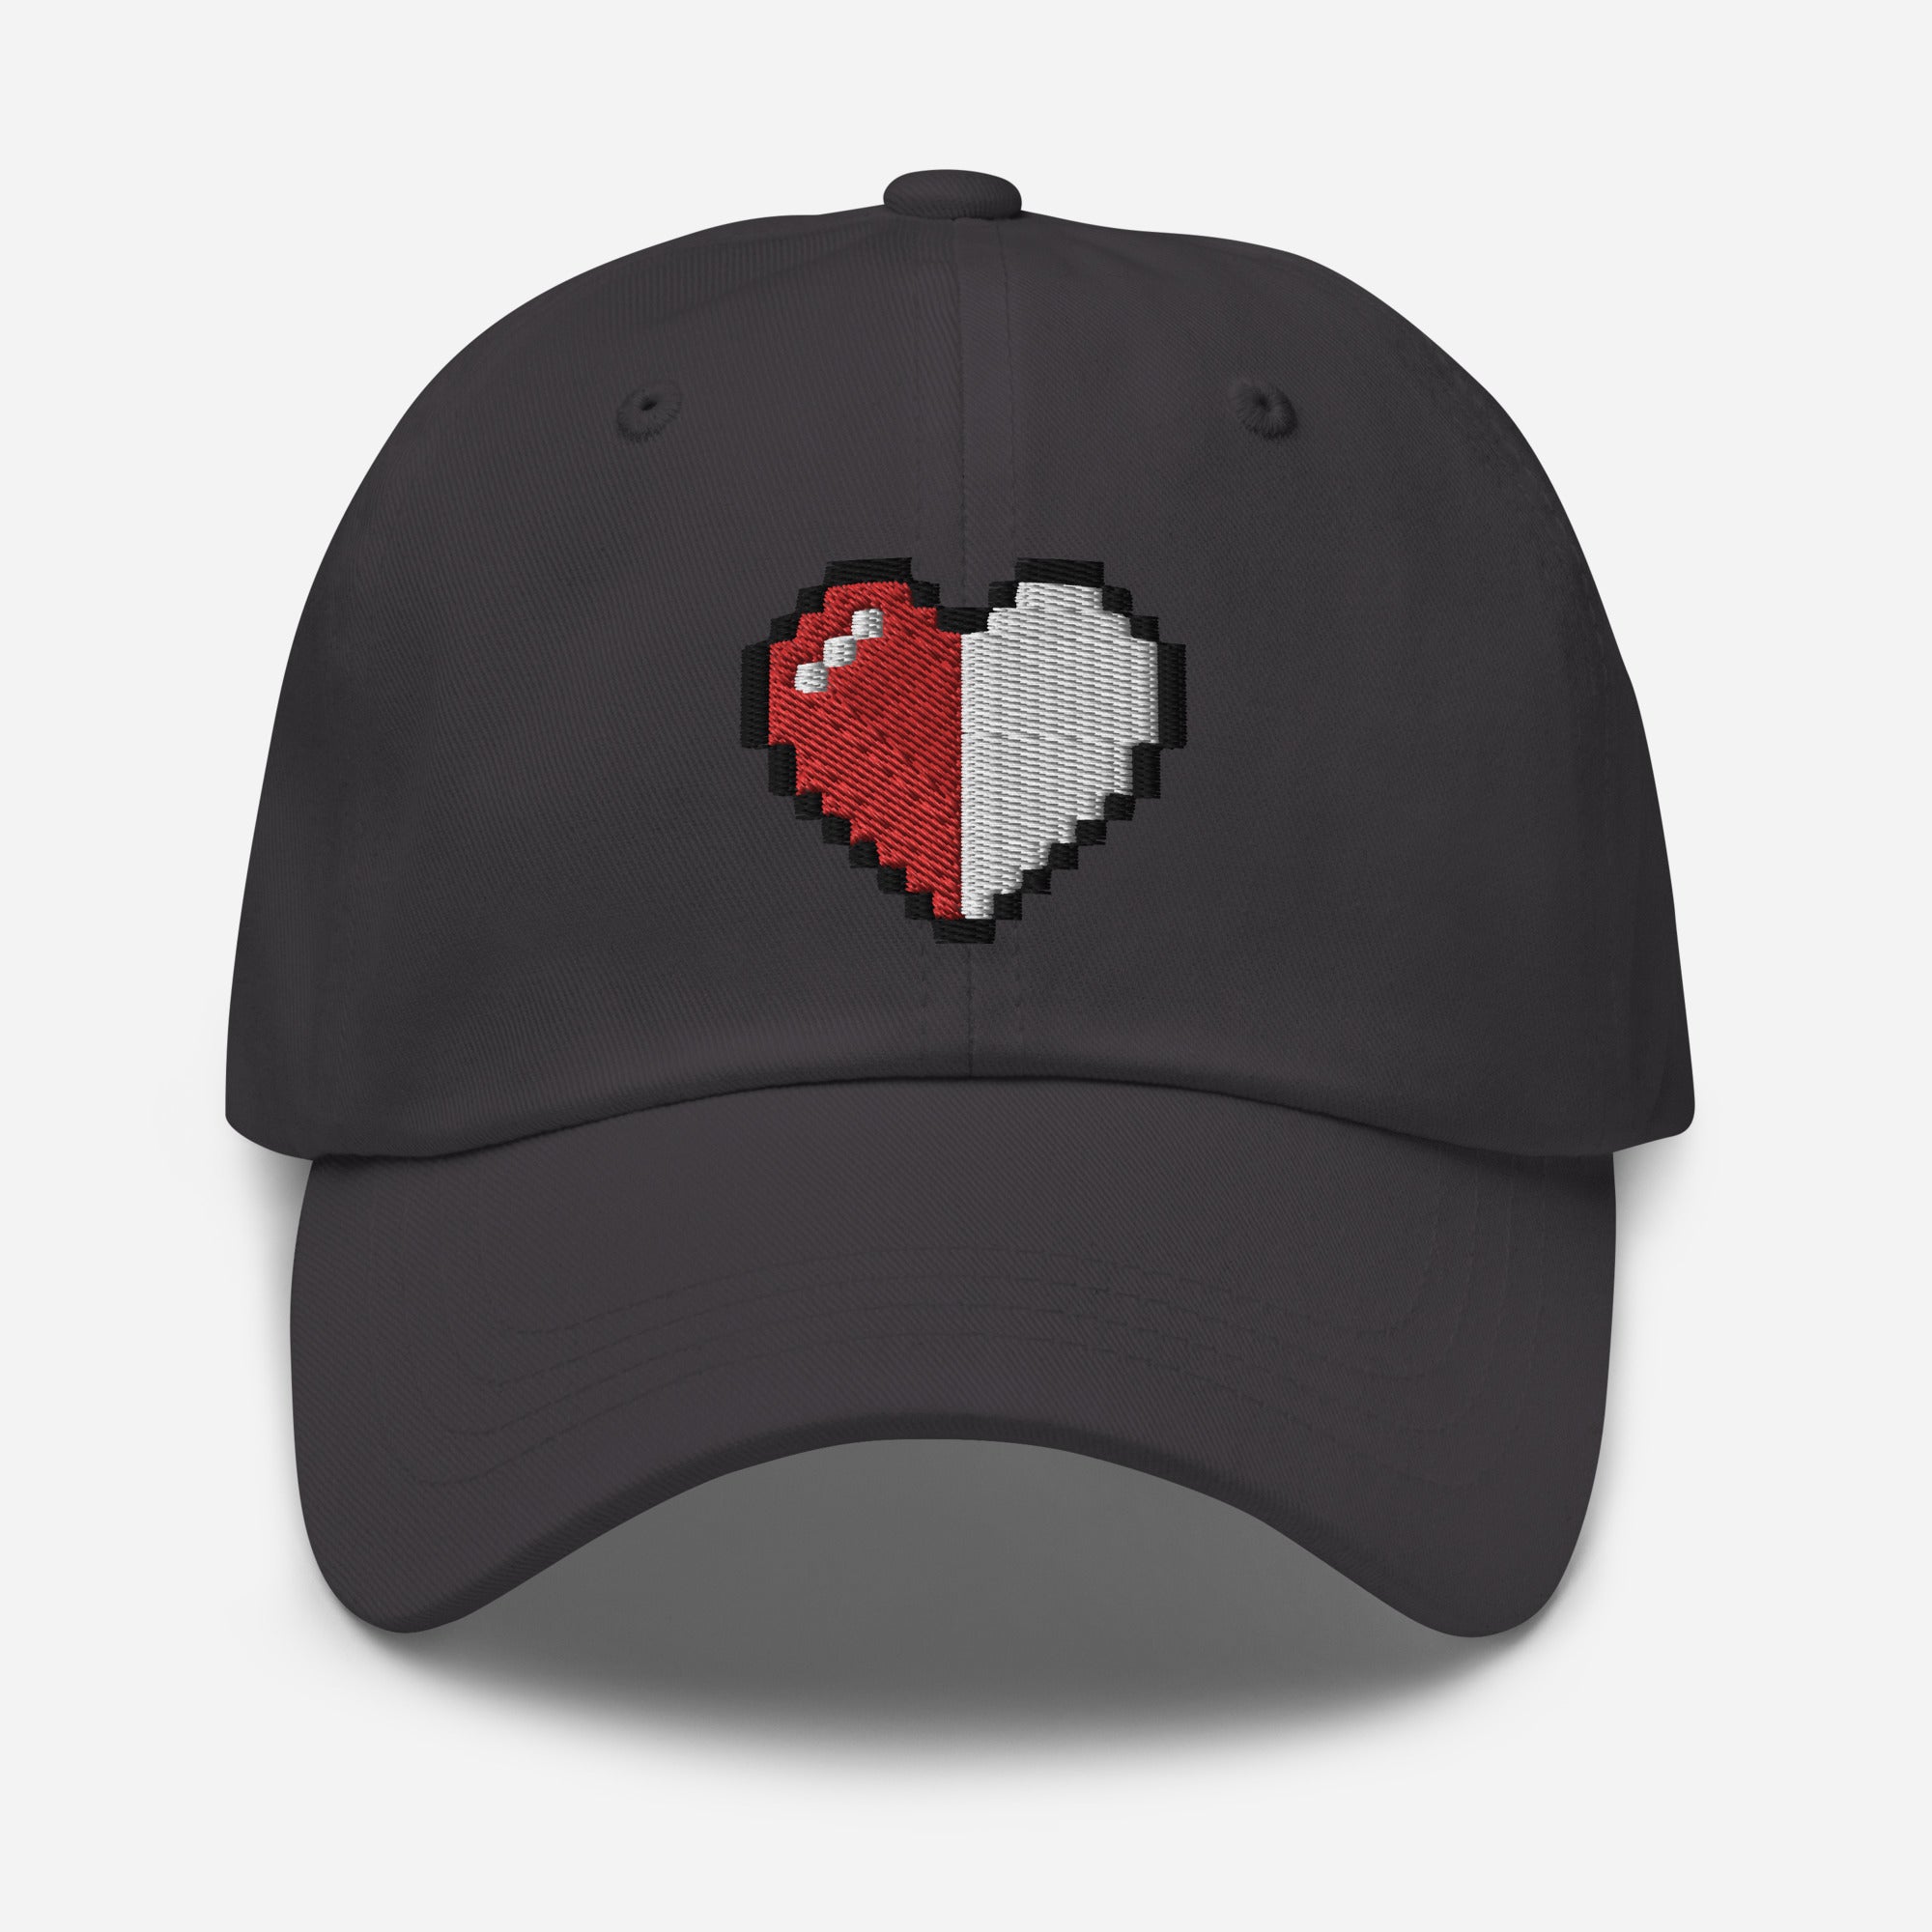 Retro 8 Bit Video Game Pixelated Half Heart Embroidered Baseball Cap Half Life